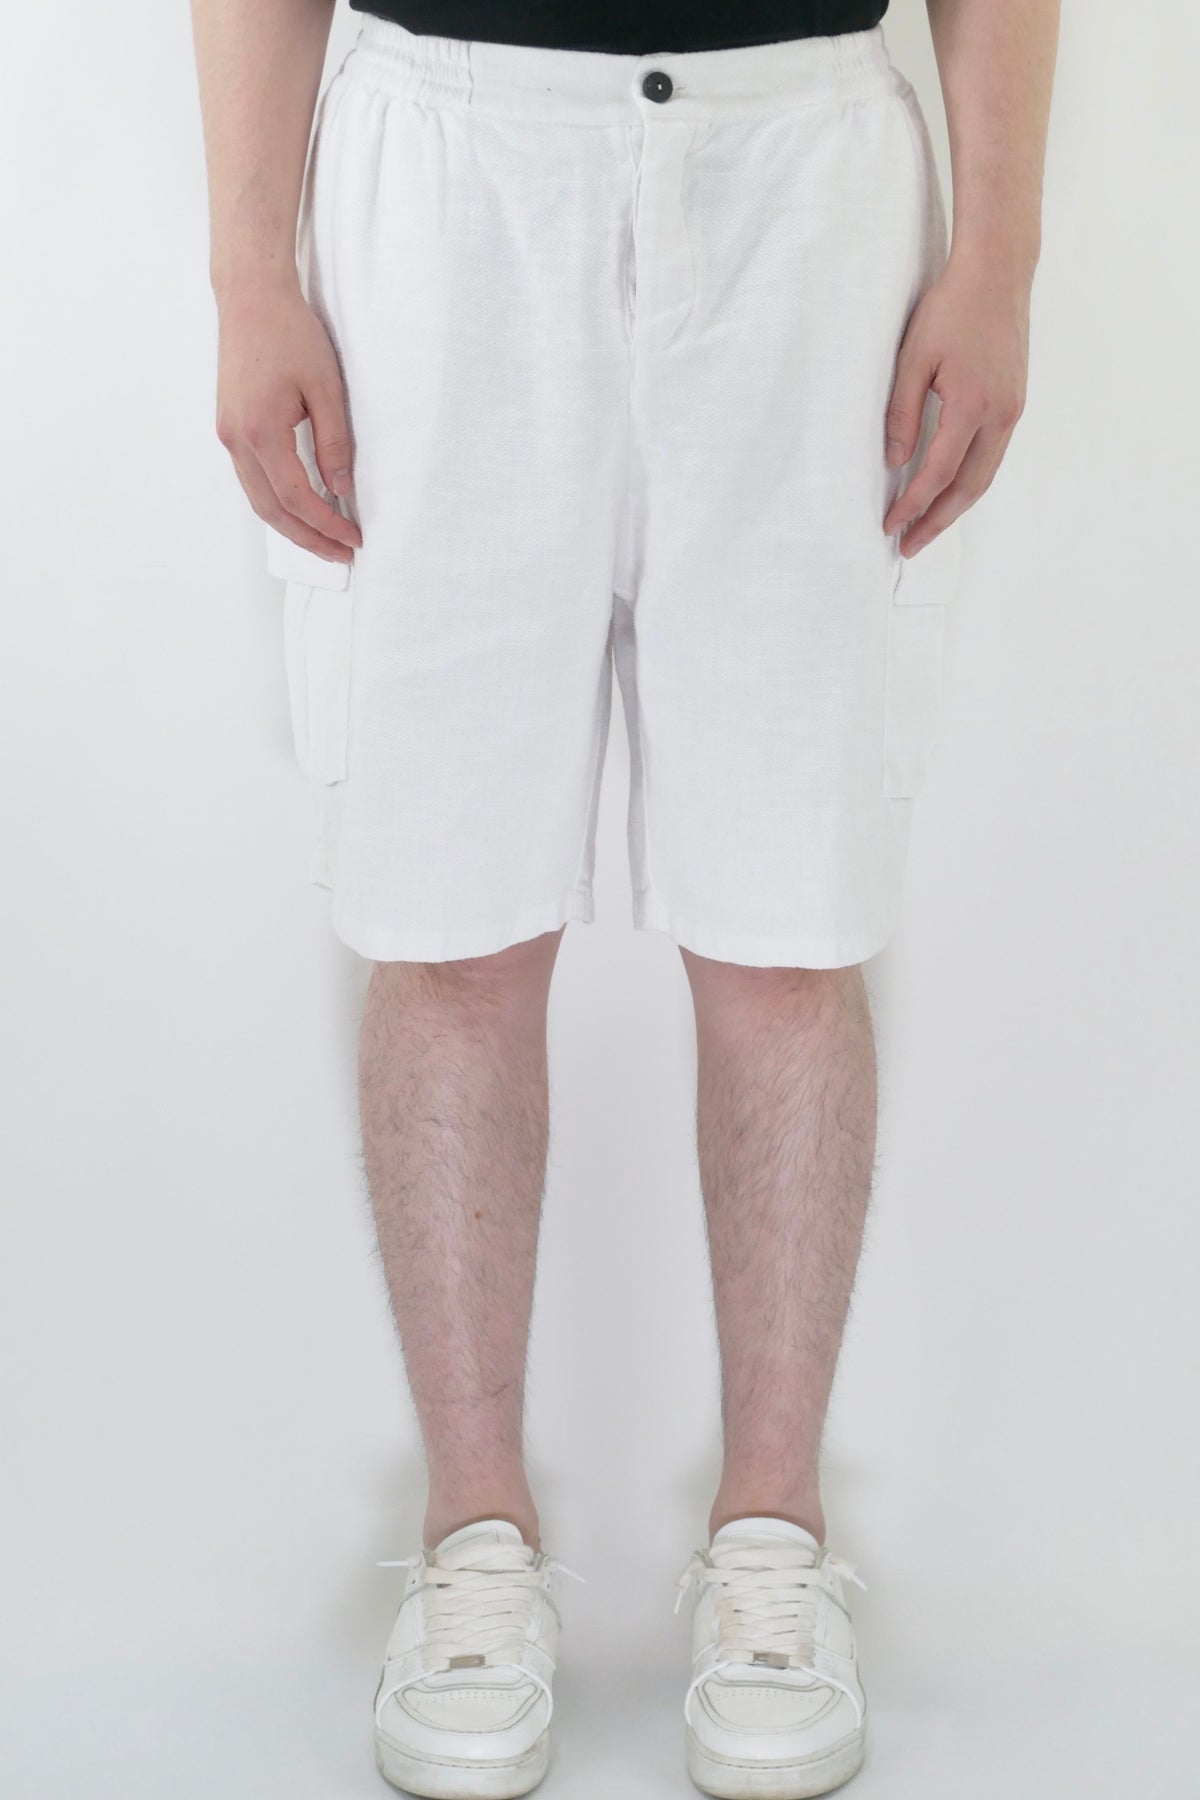 Athoa Bermuda Cargo Shorts - White